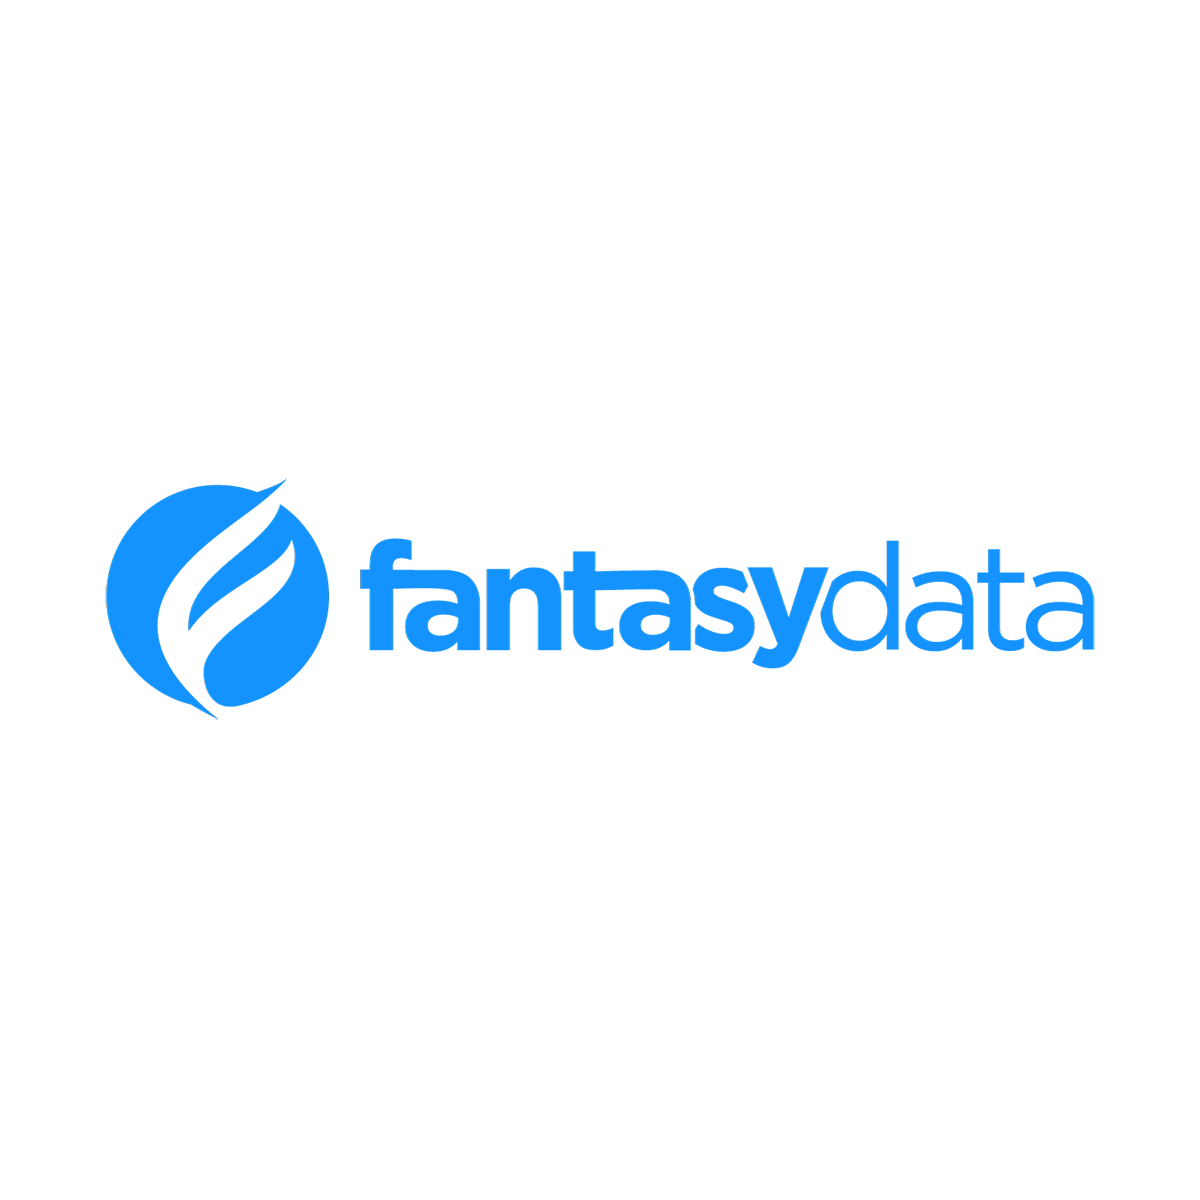 Fantasy Football Stats and Season Leaders | FantasyData